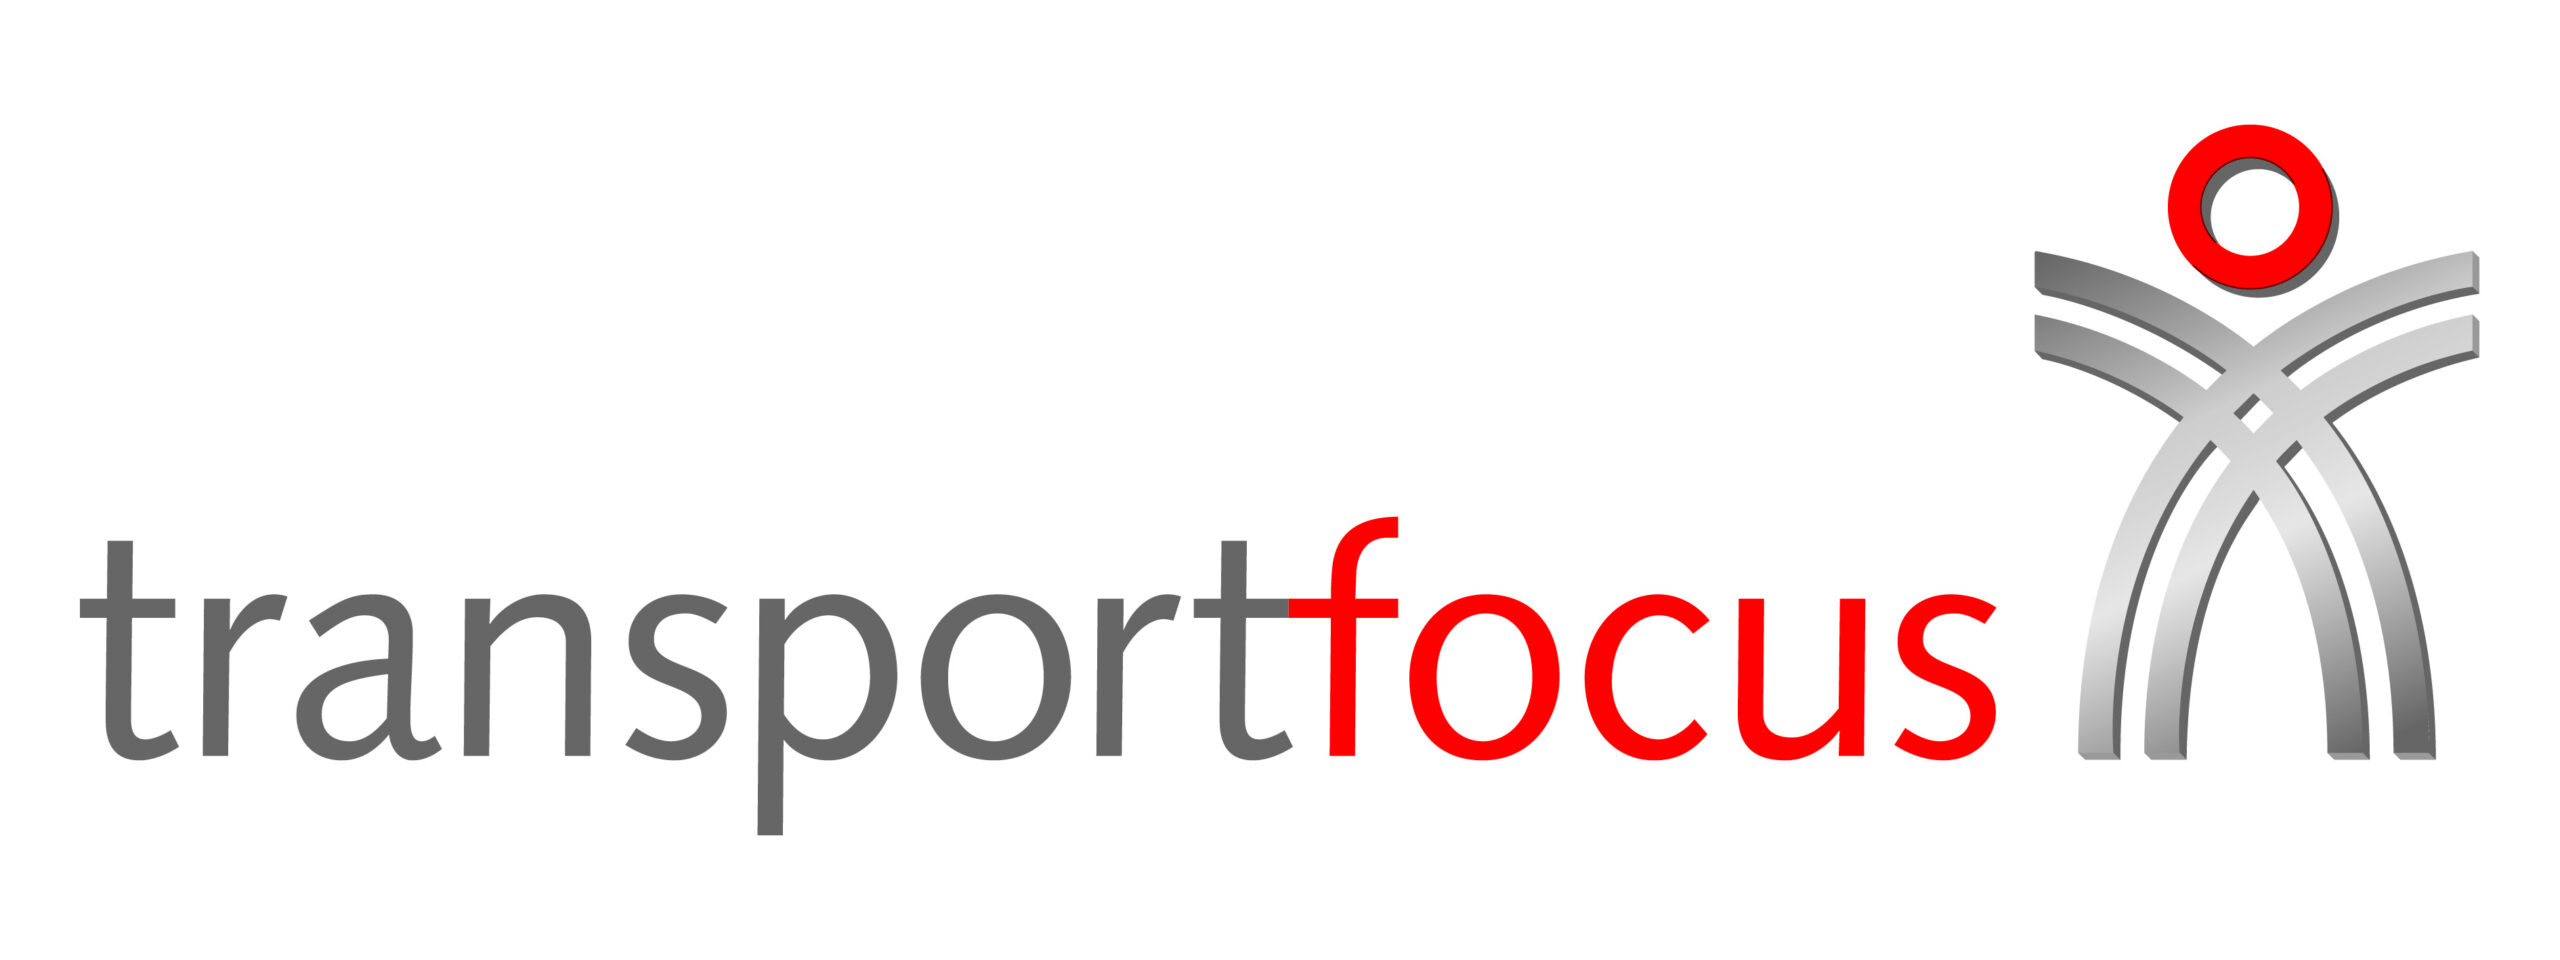 Transport Focus logo